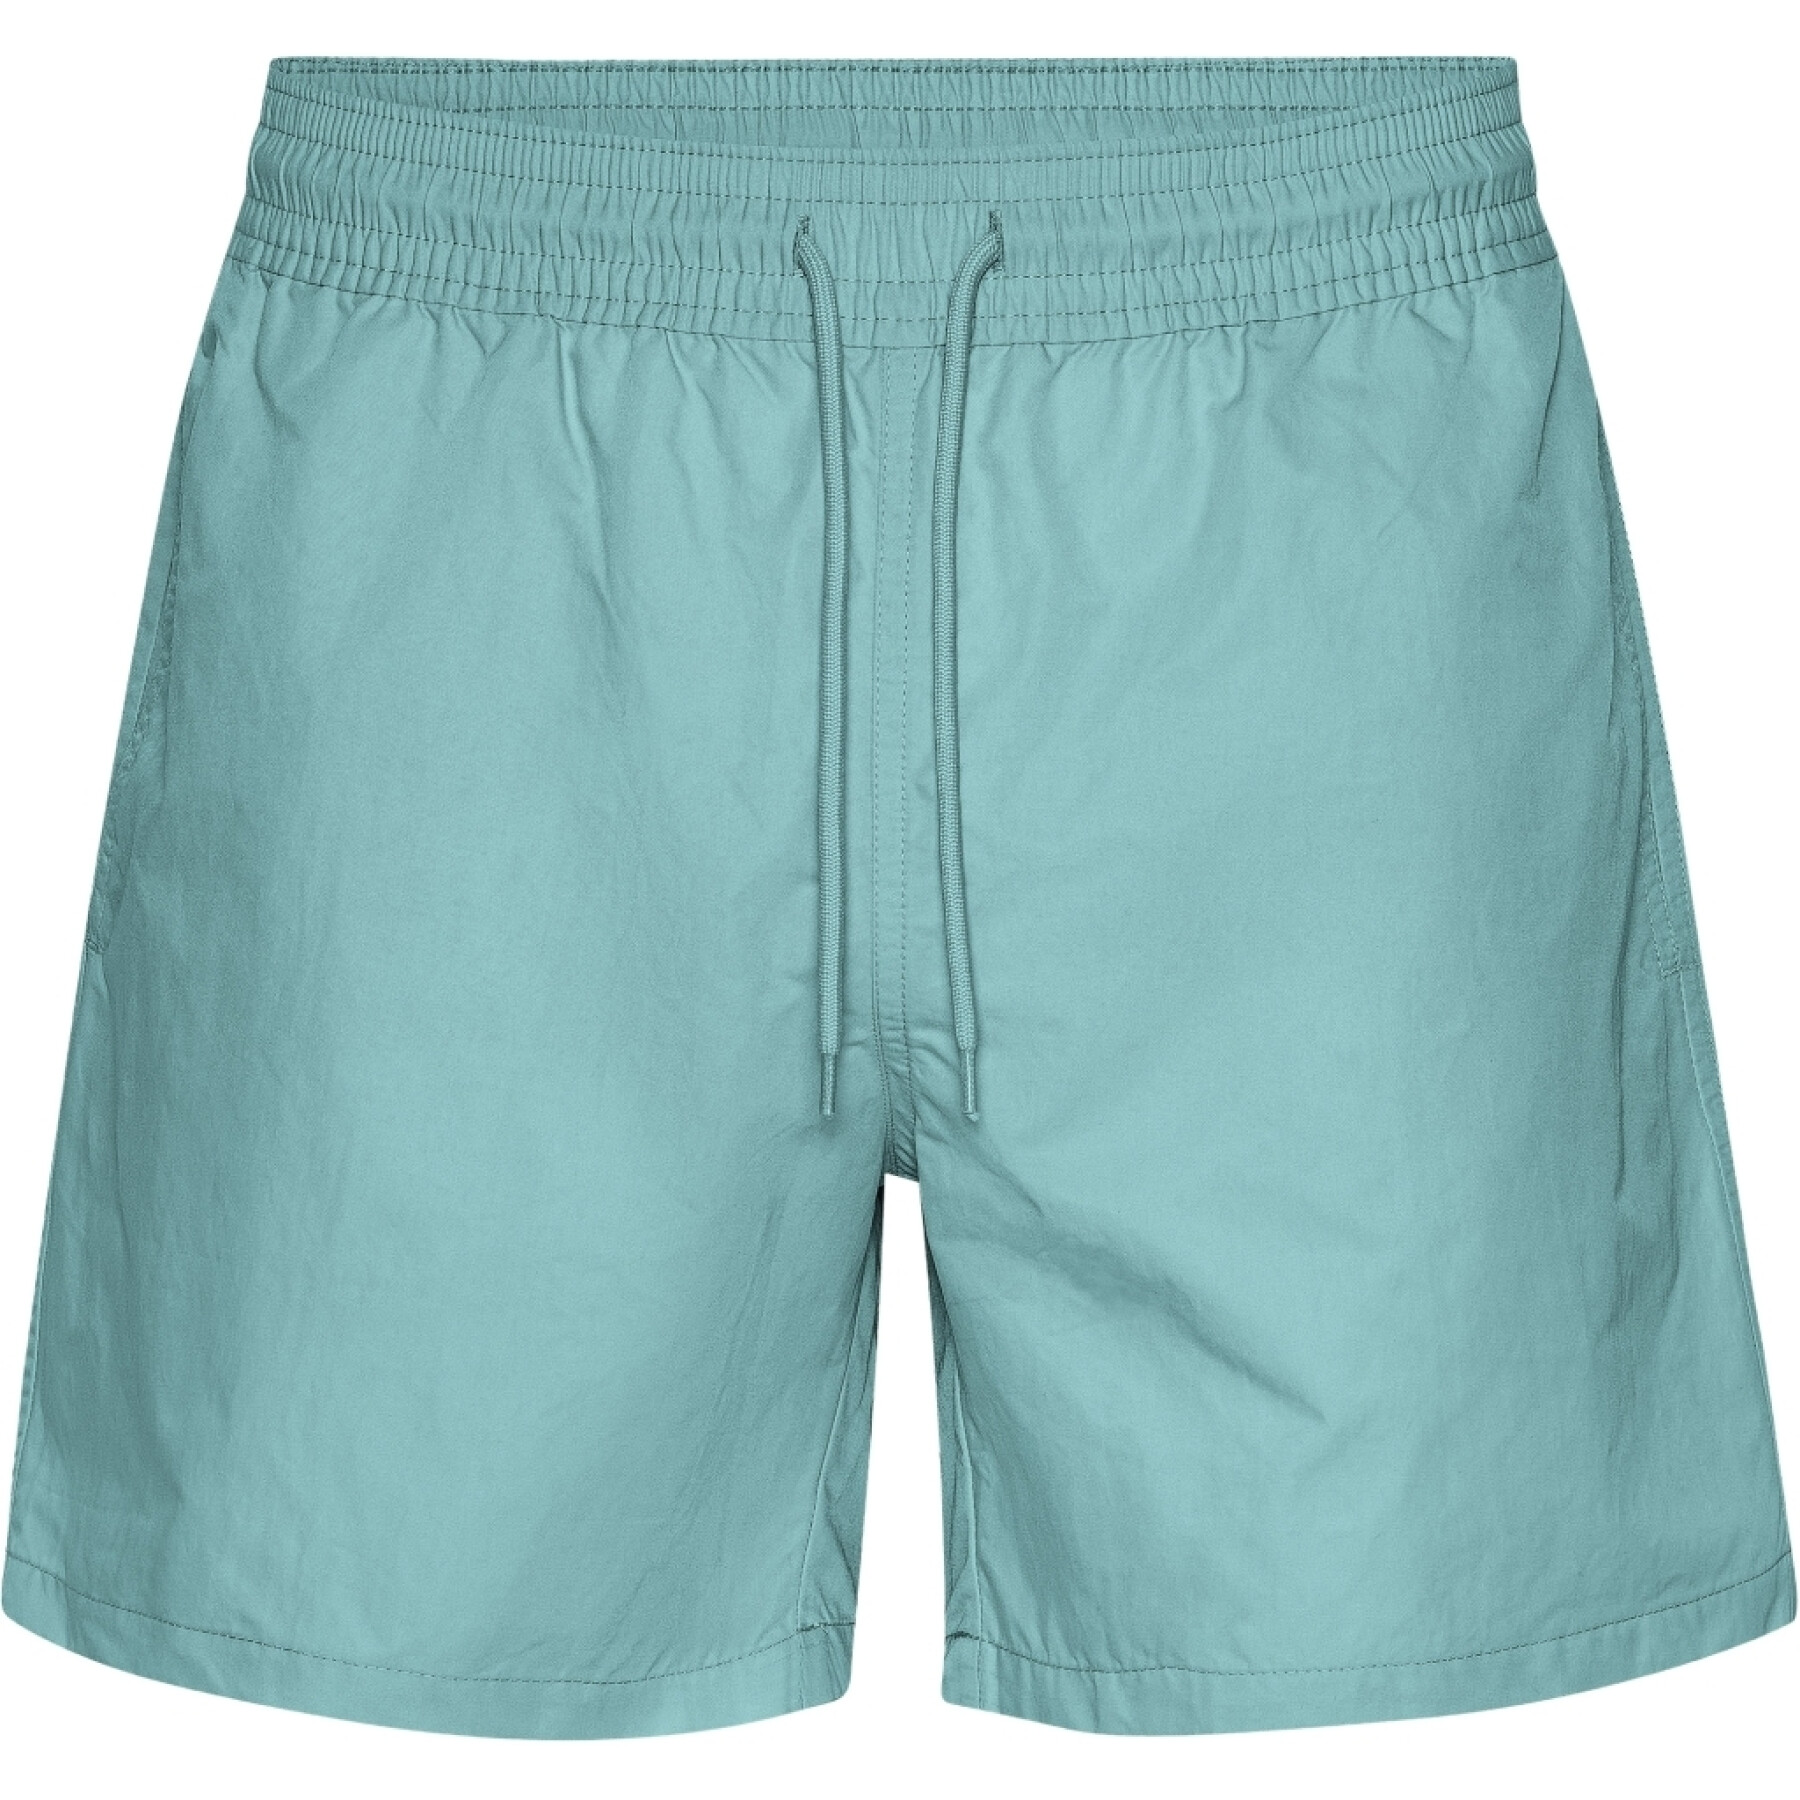 Swim shorts Colorful Standard Classic Teal Blue